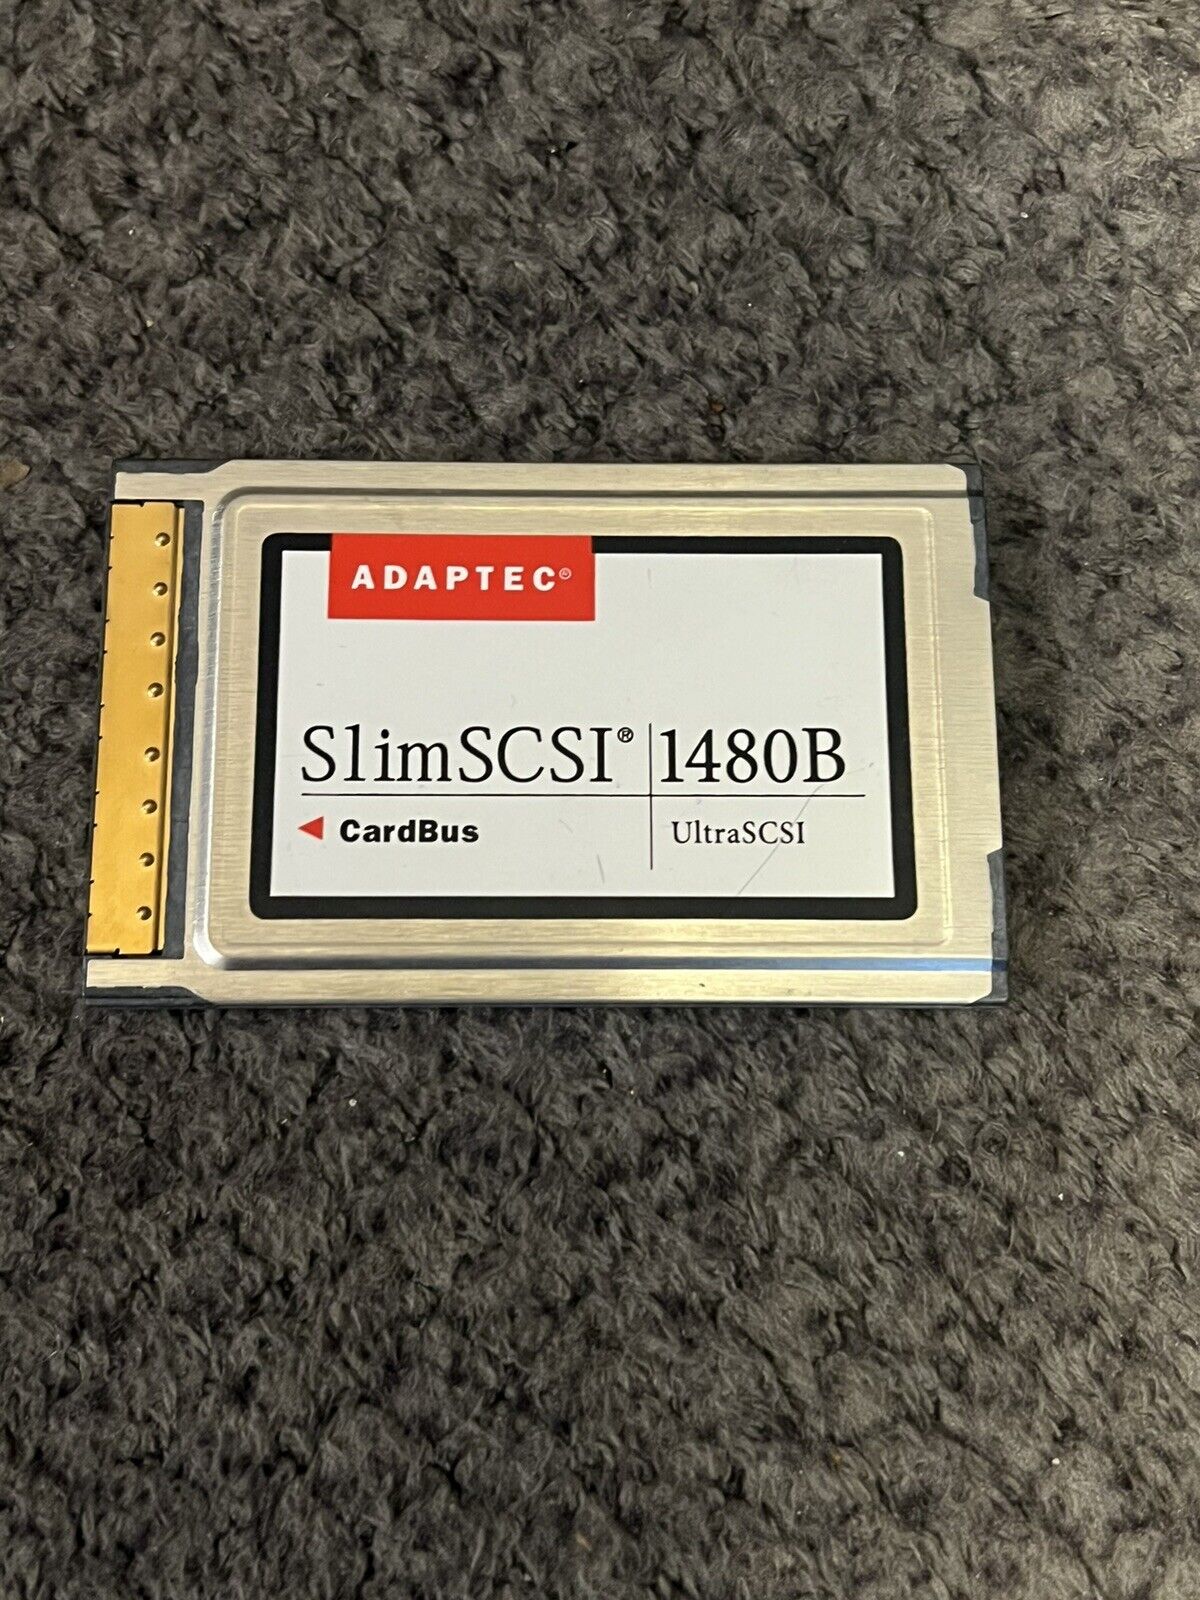 Adaptec Slim SCSI 1480B No Cord. Untested